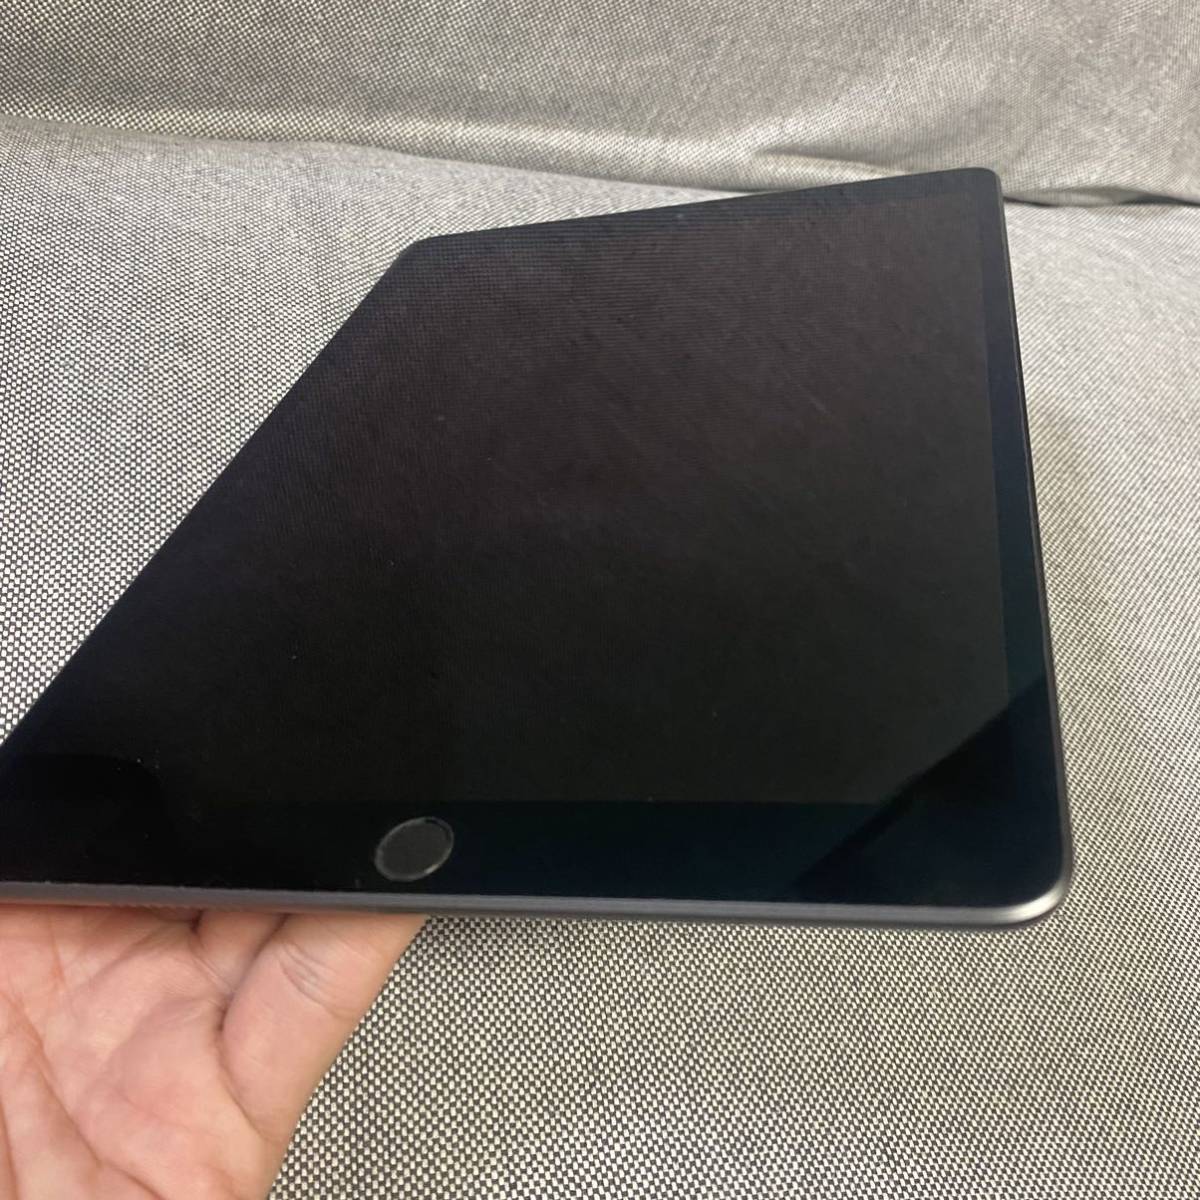 iPad Air 10 5インチ 第3世代 Wi-Fi 64GB 2019年春モデル NUUJ2J/A +